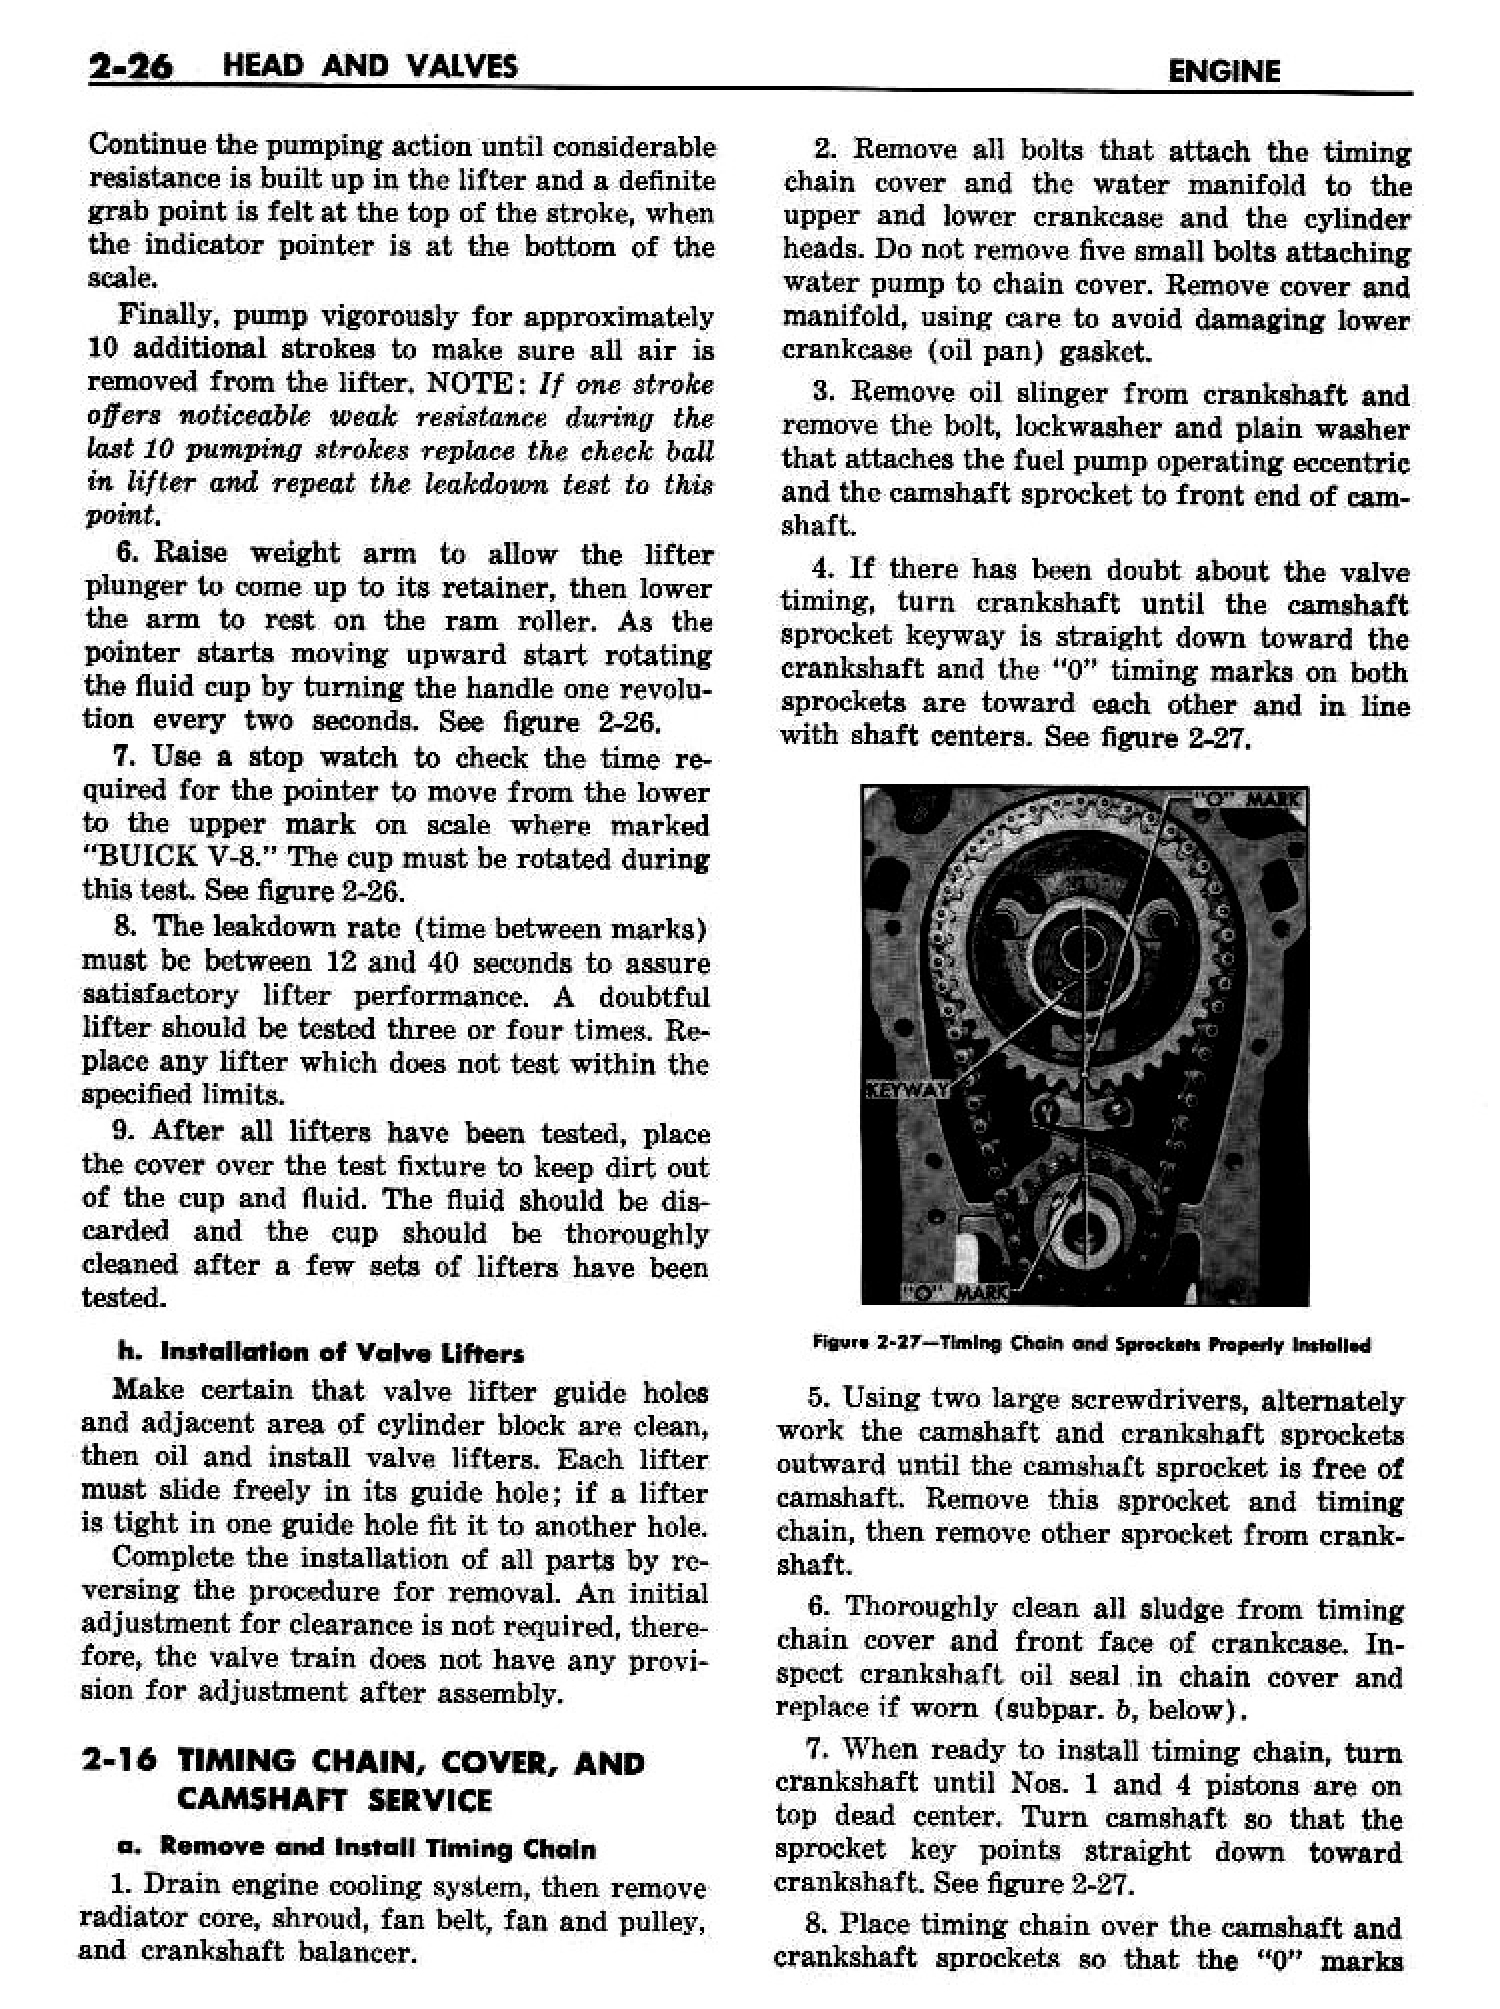 n_03 1958 Buick Shop Manual - Engine_26.jpg